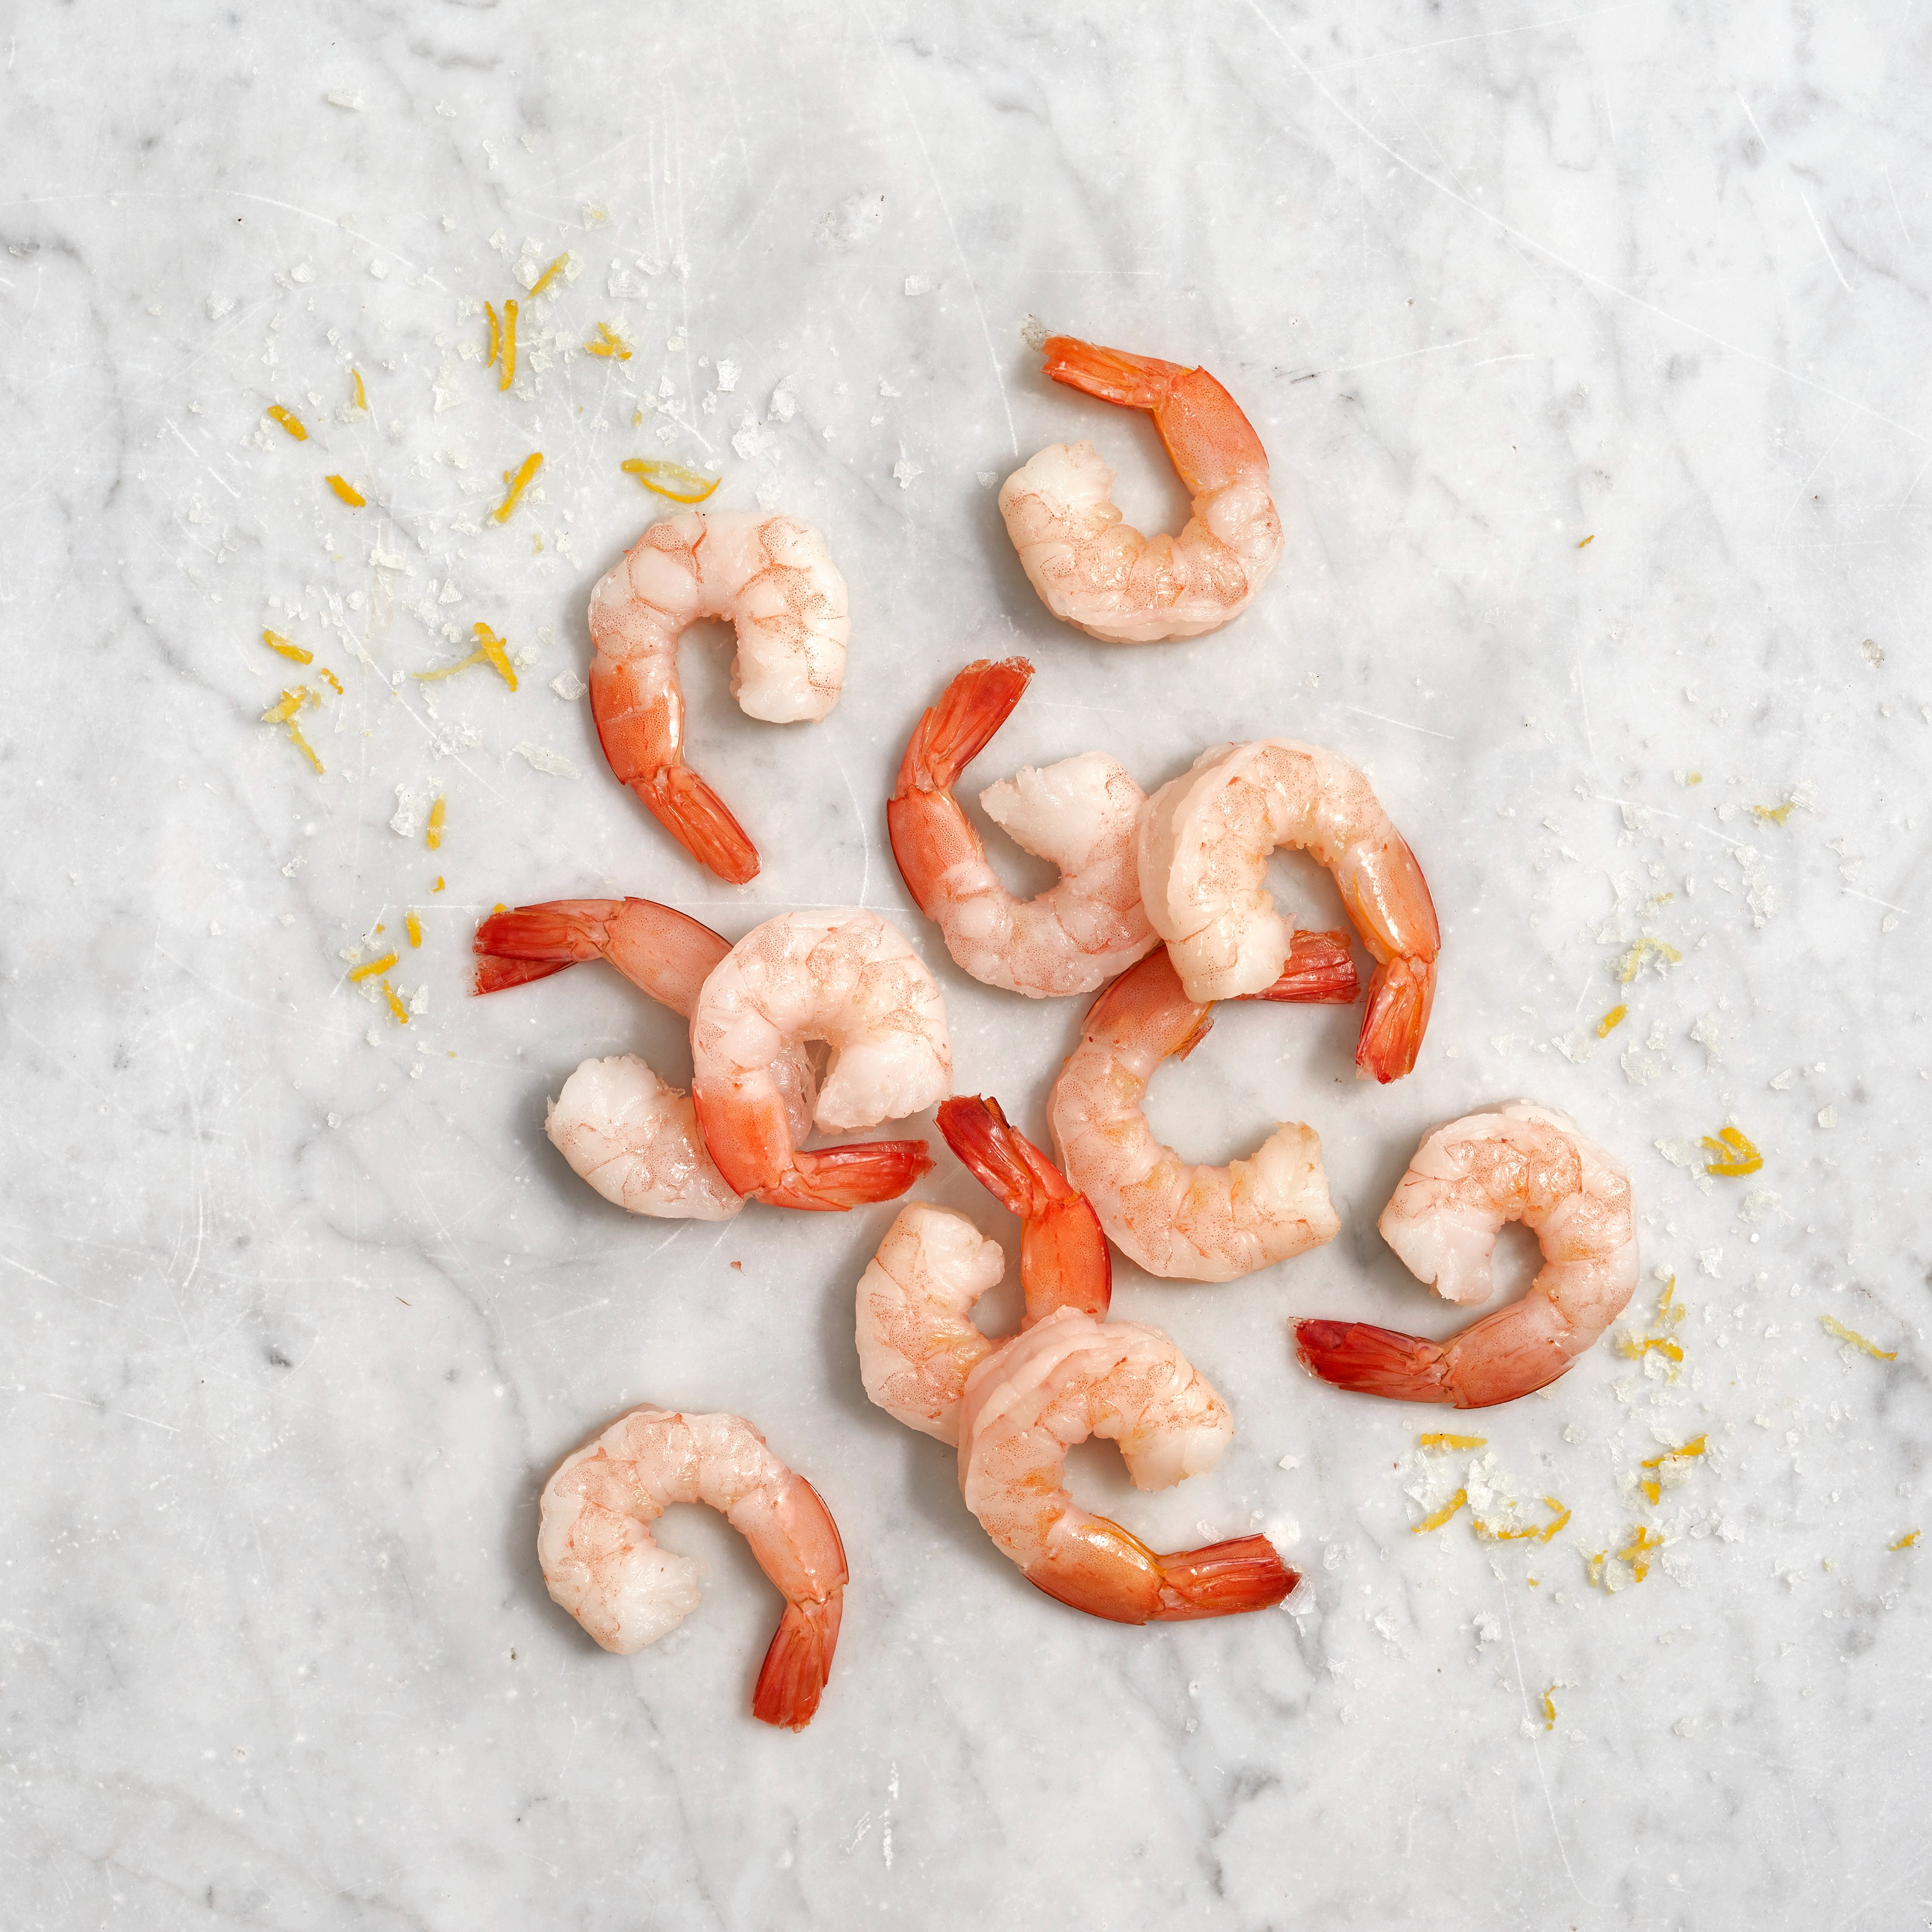 Jumbo Shrimp Online - Cooked, Peeled, & Deveined